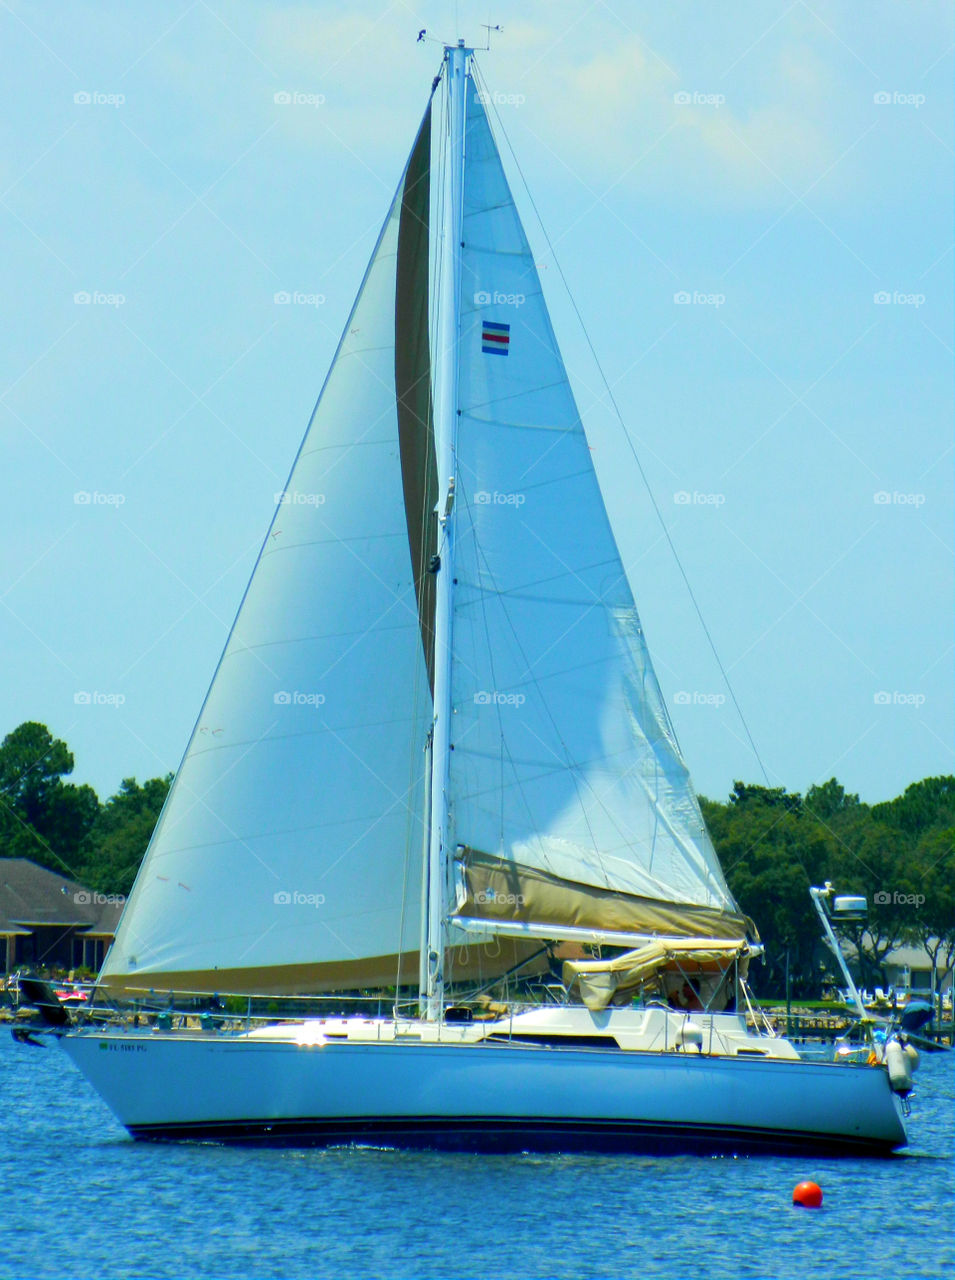 Classic Sail